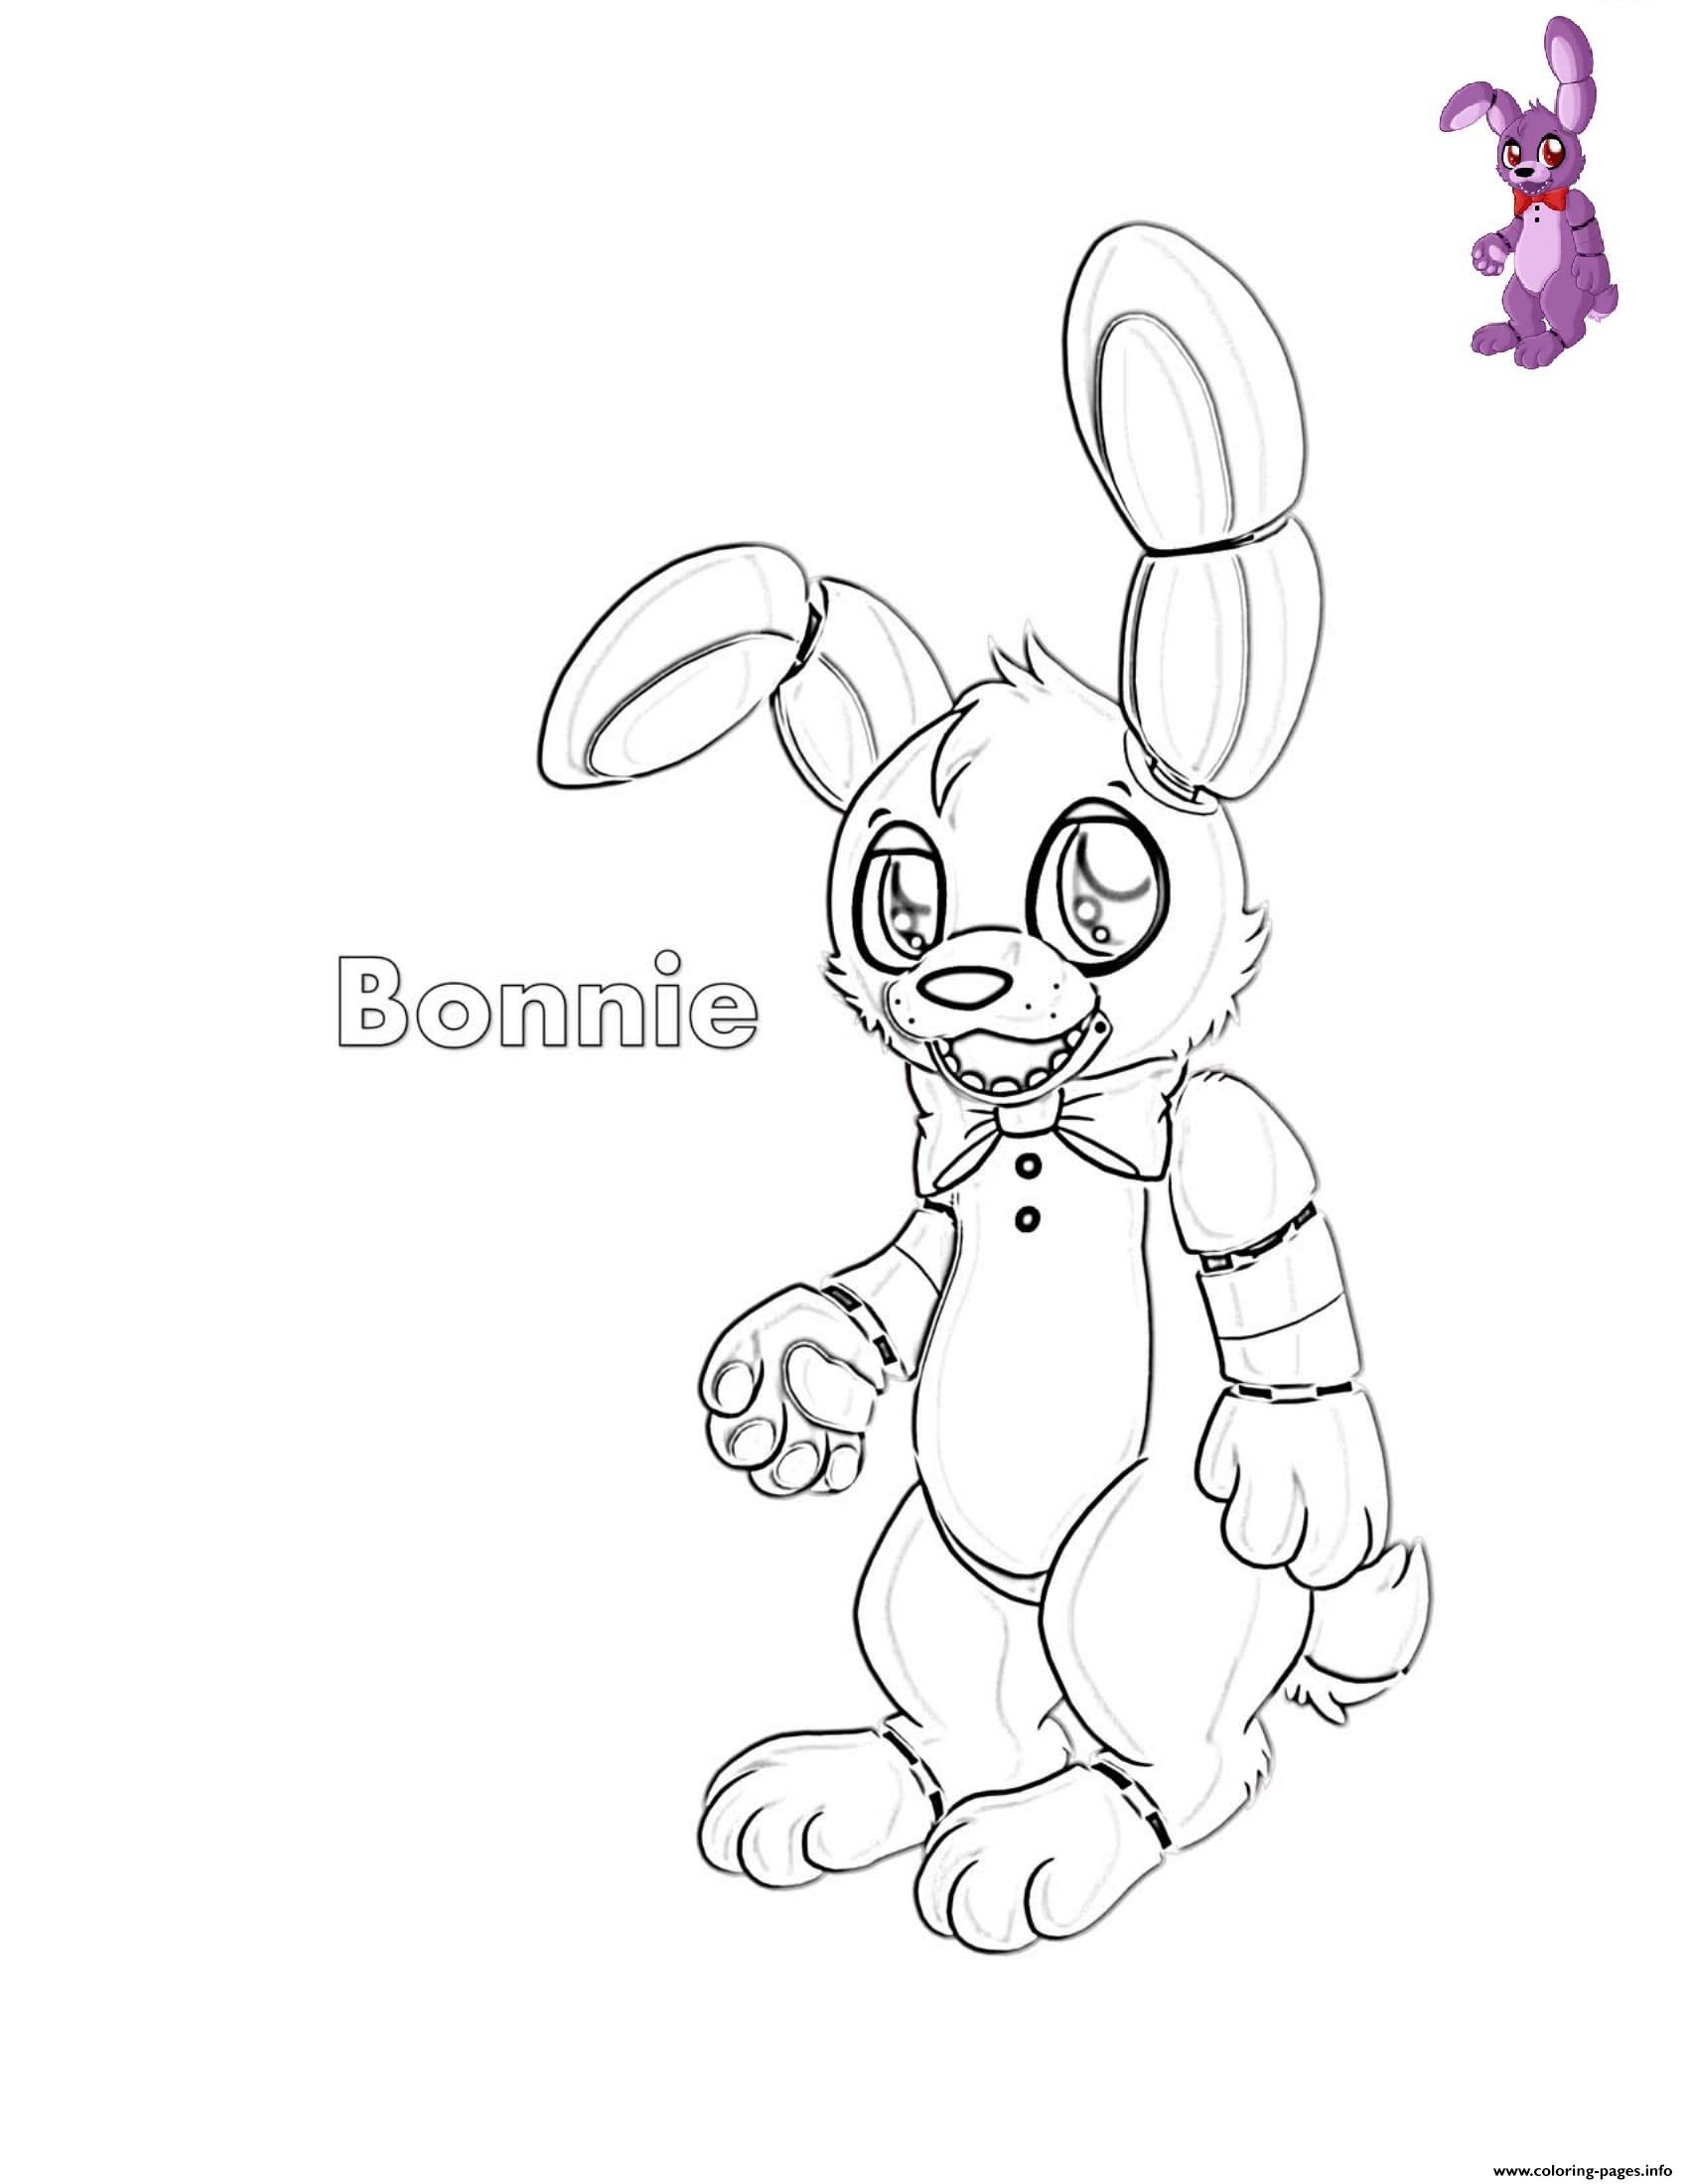 Cute Bonnie FNAF coloring